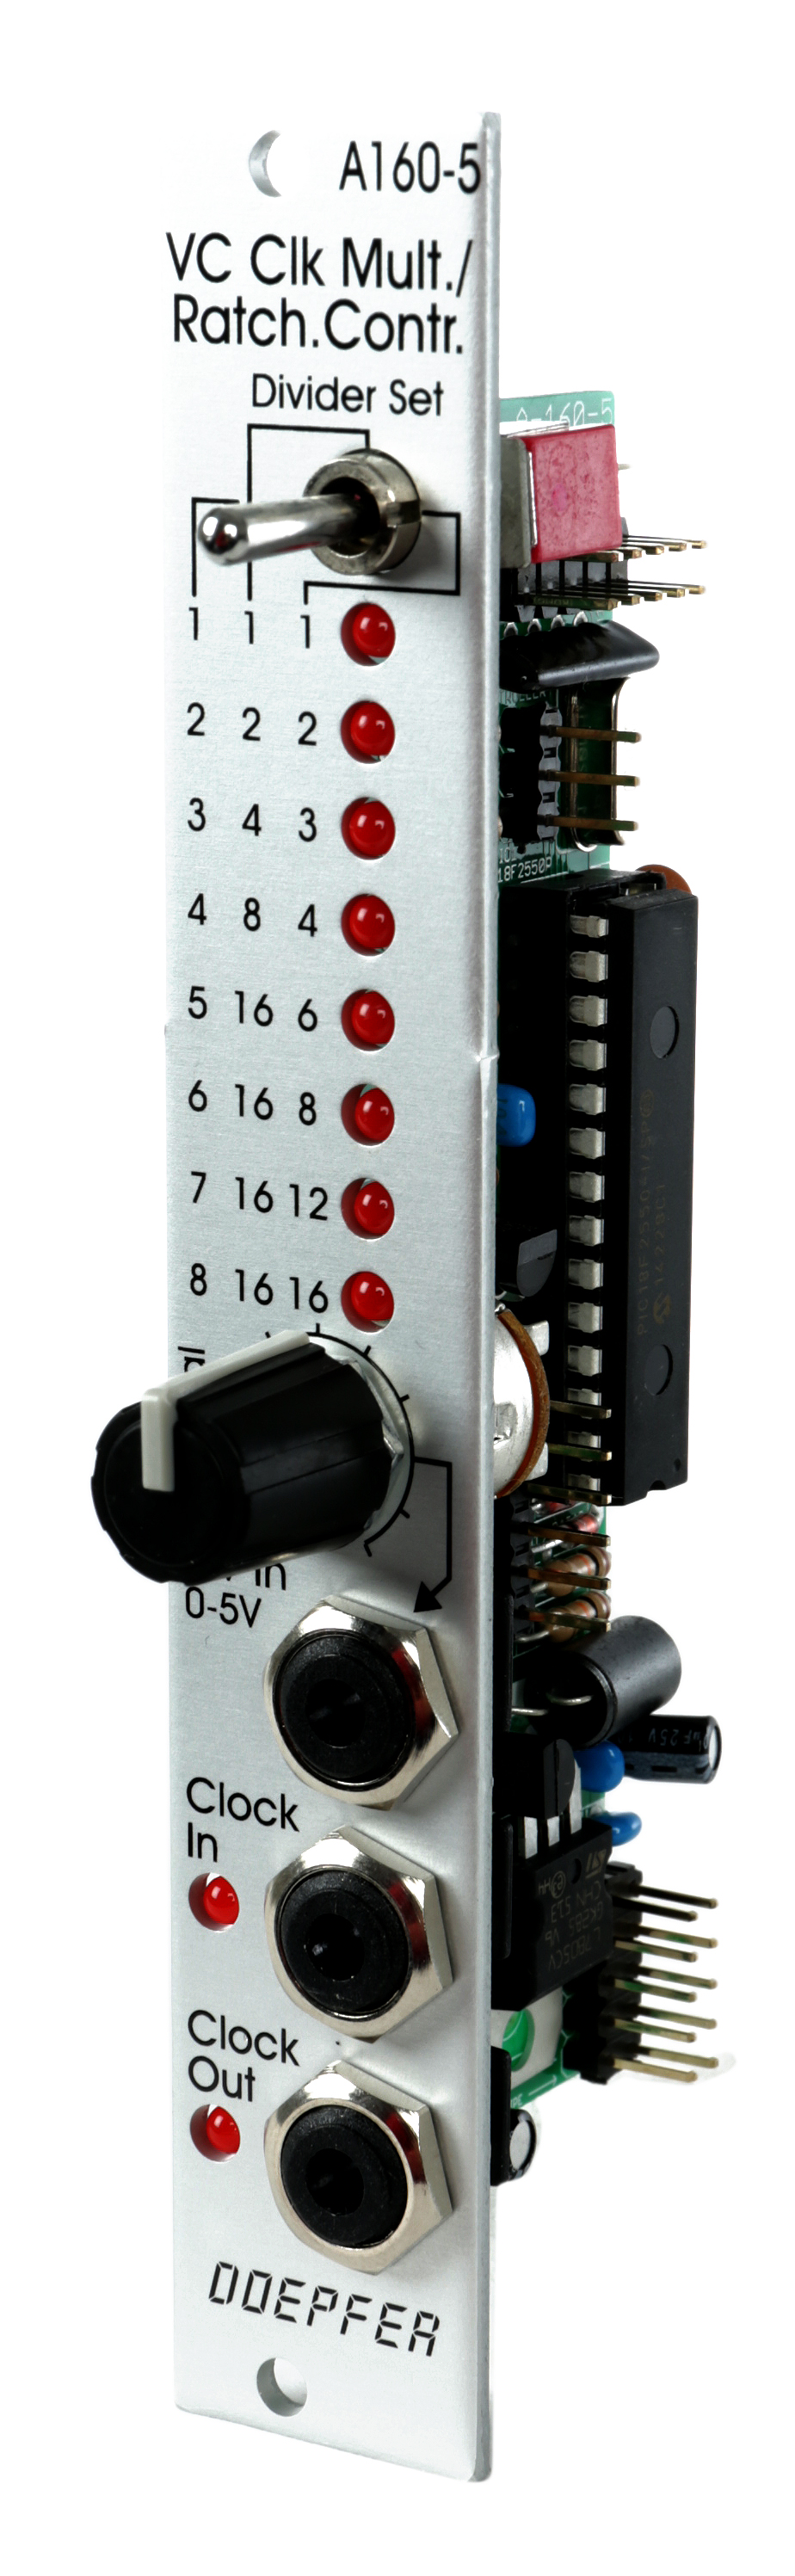 A-160-5 Clock Multiplie/Ratcheting Controller